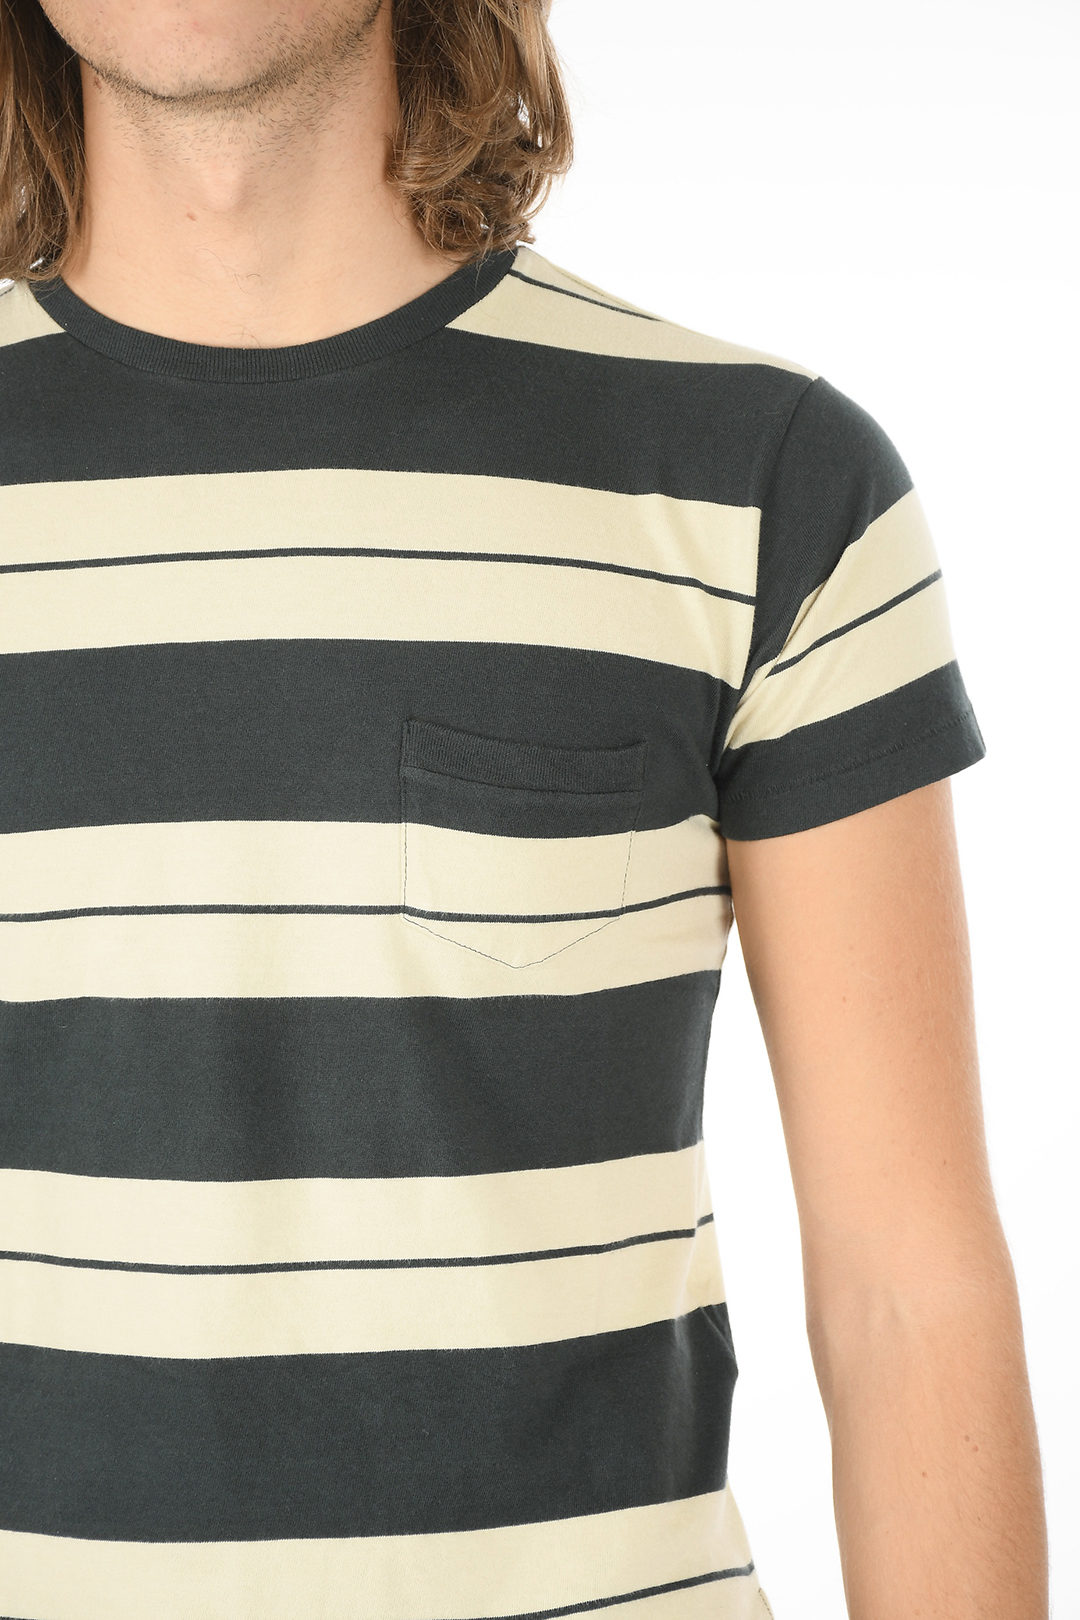 godt Gammeldags Afgift Levi's SPORTSWEAR Striped Two-Tone Crew-Neck T-shirt men - Glamood Outlet